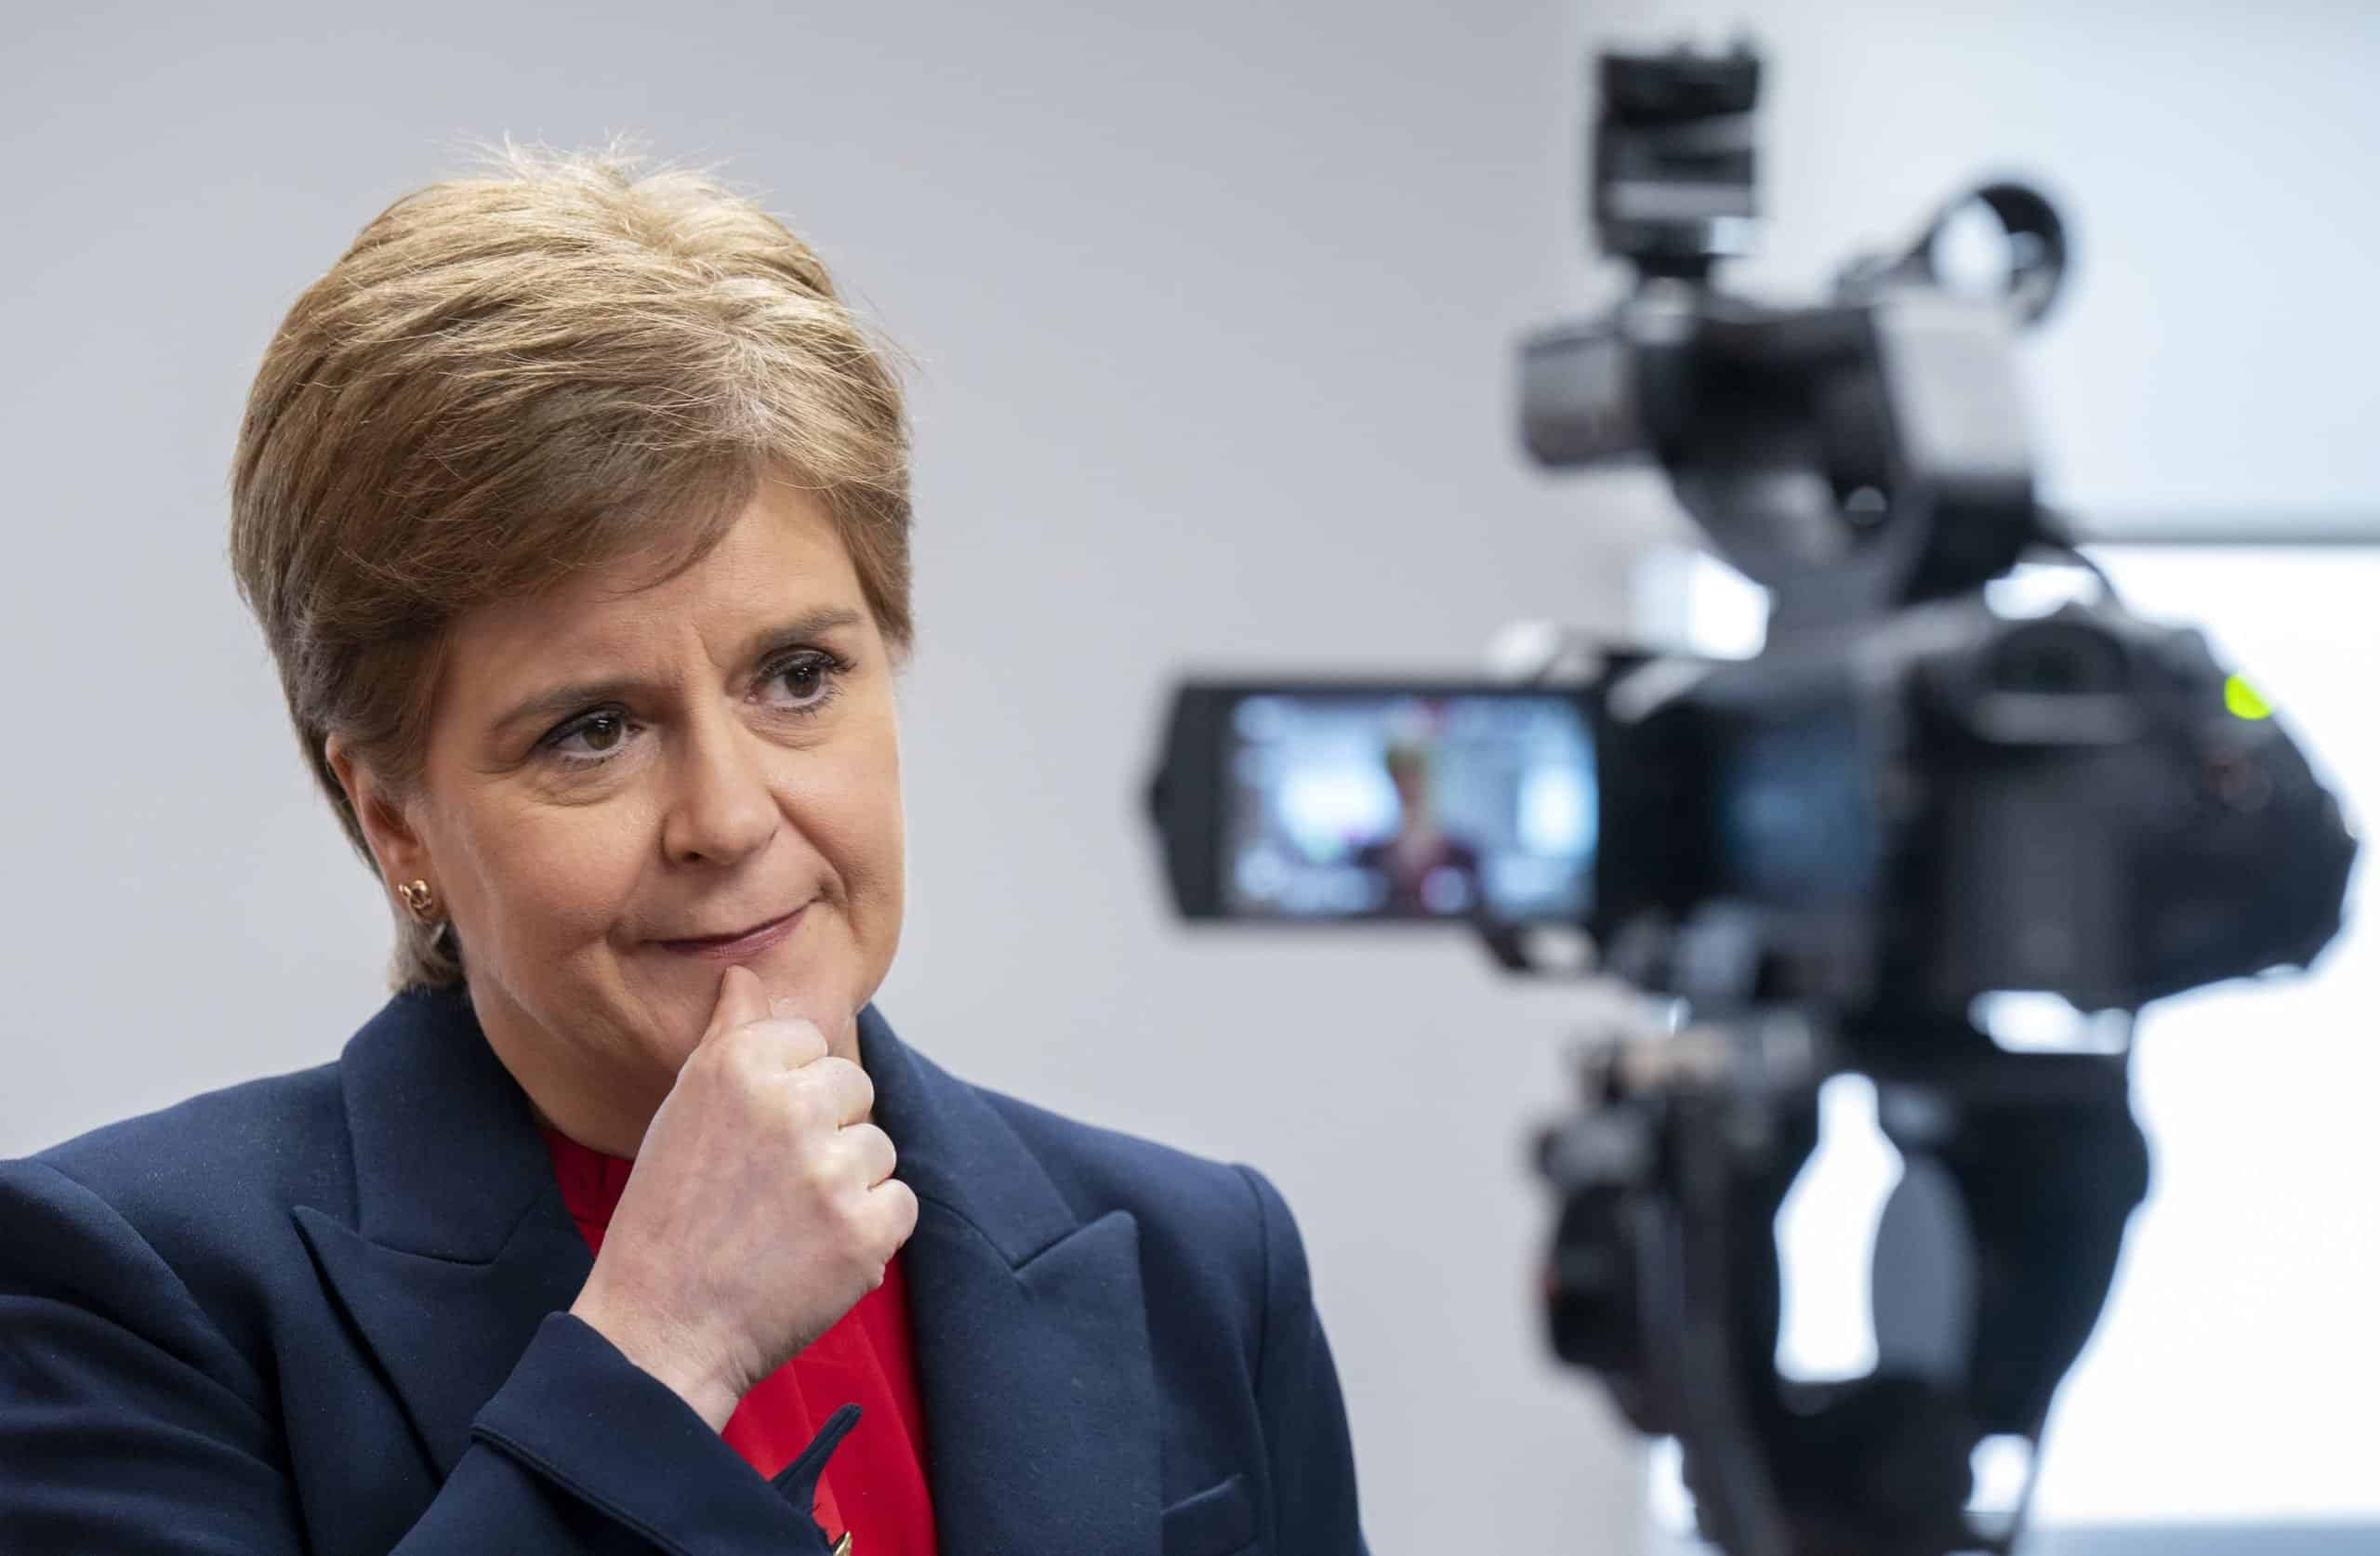 Nicola Sturgeon to resign as Scottish first minister